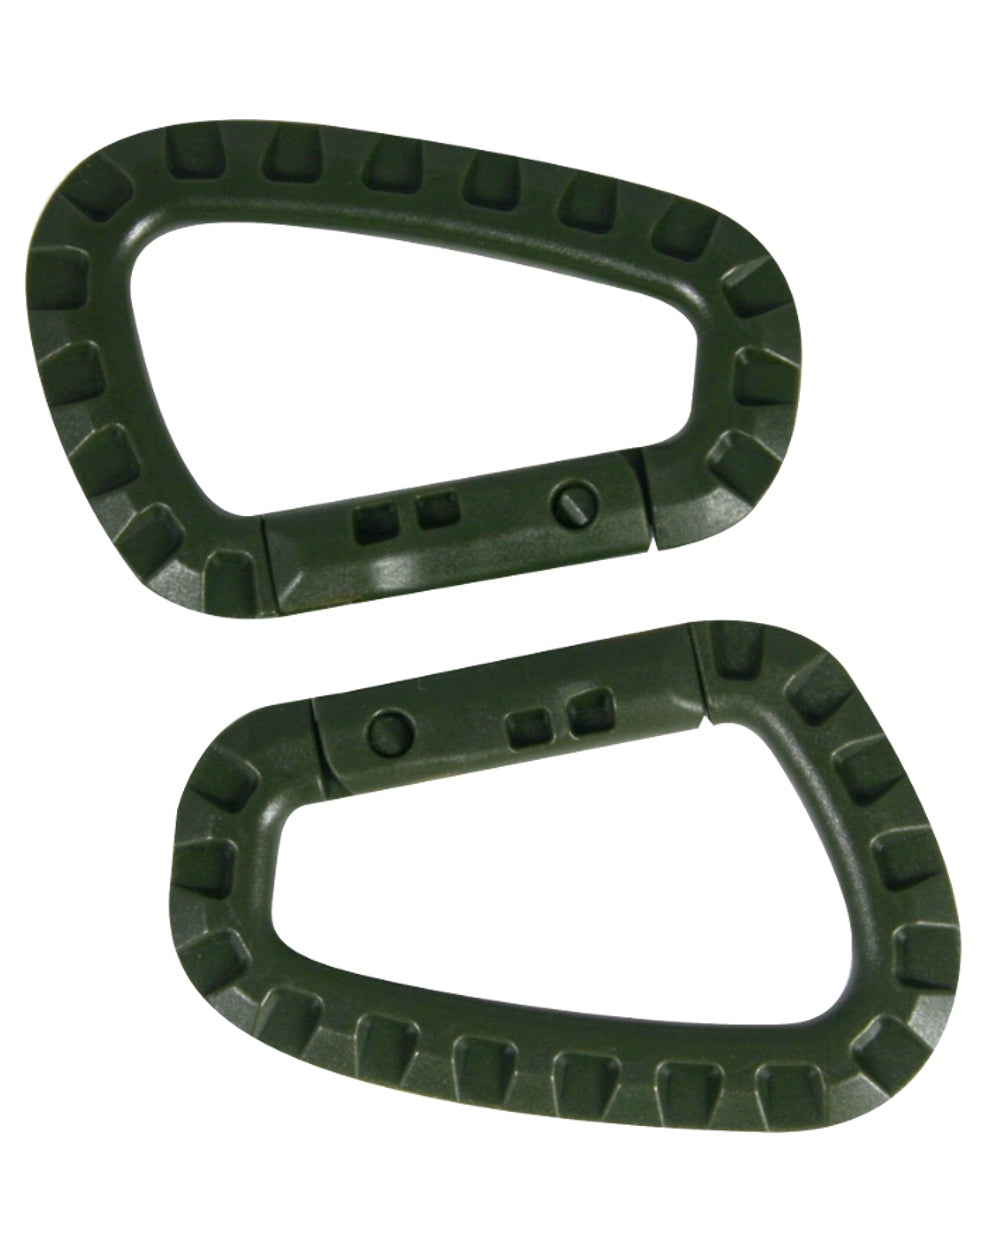 Viper Tactical Carabina in Green 